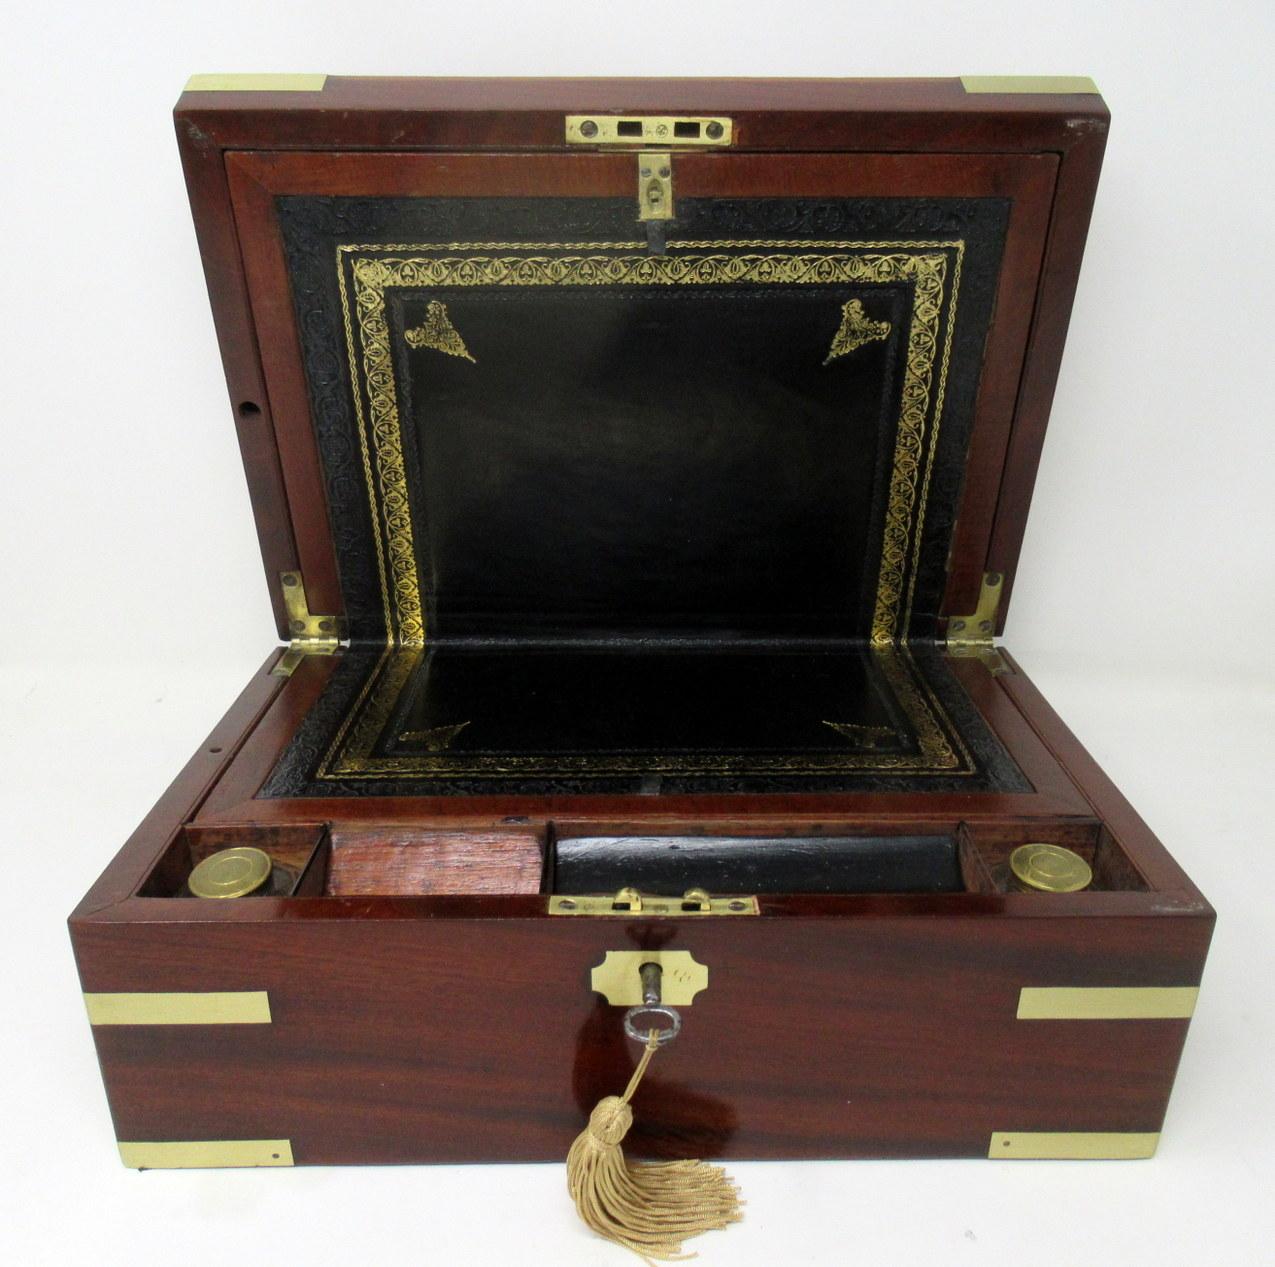 English Antique Georgian Mahogany Victorian Brass Bound Traveling Writing Slope Box